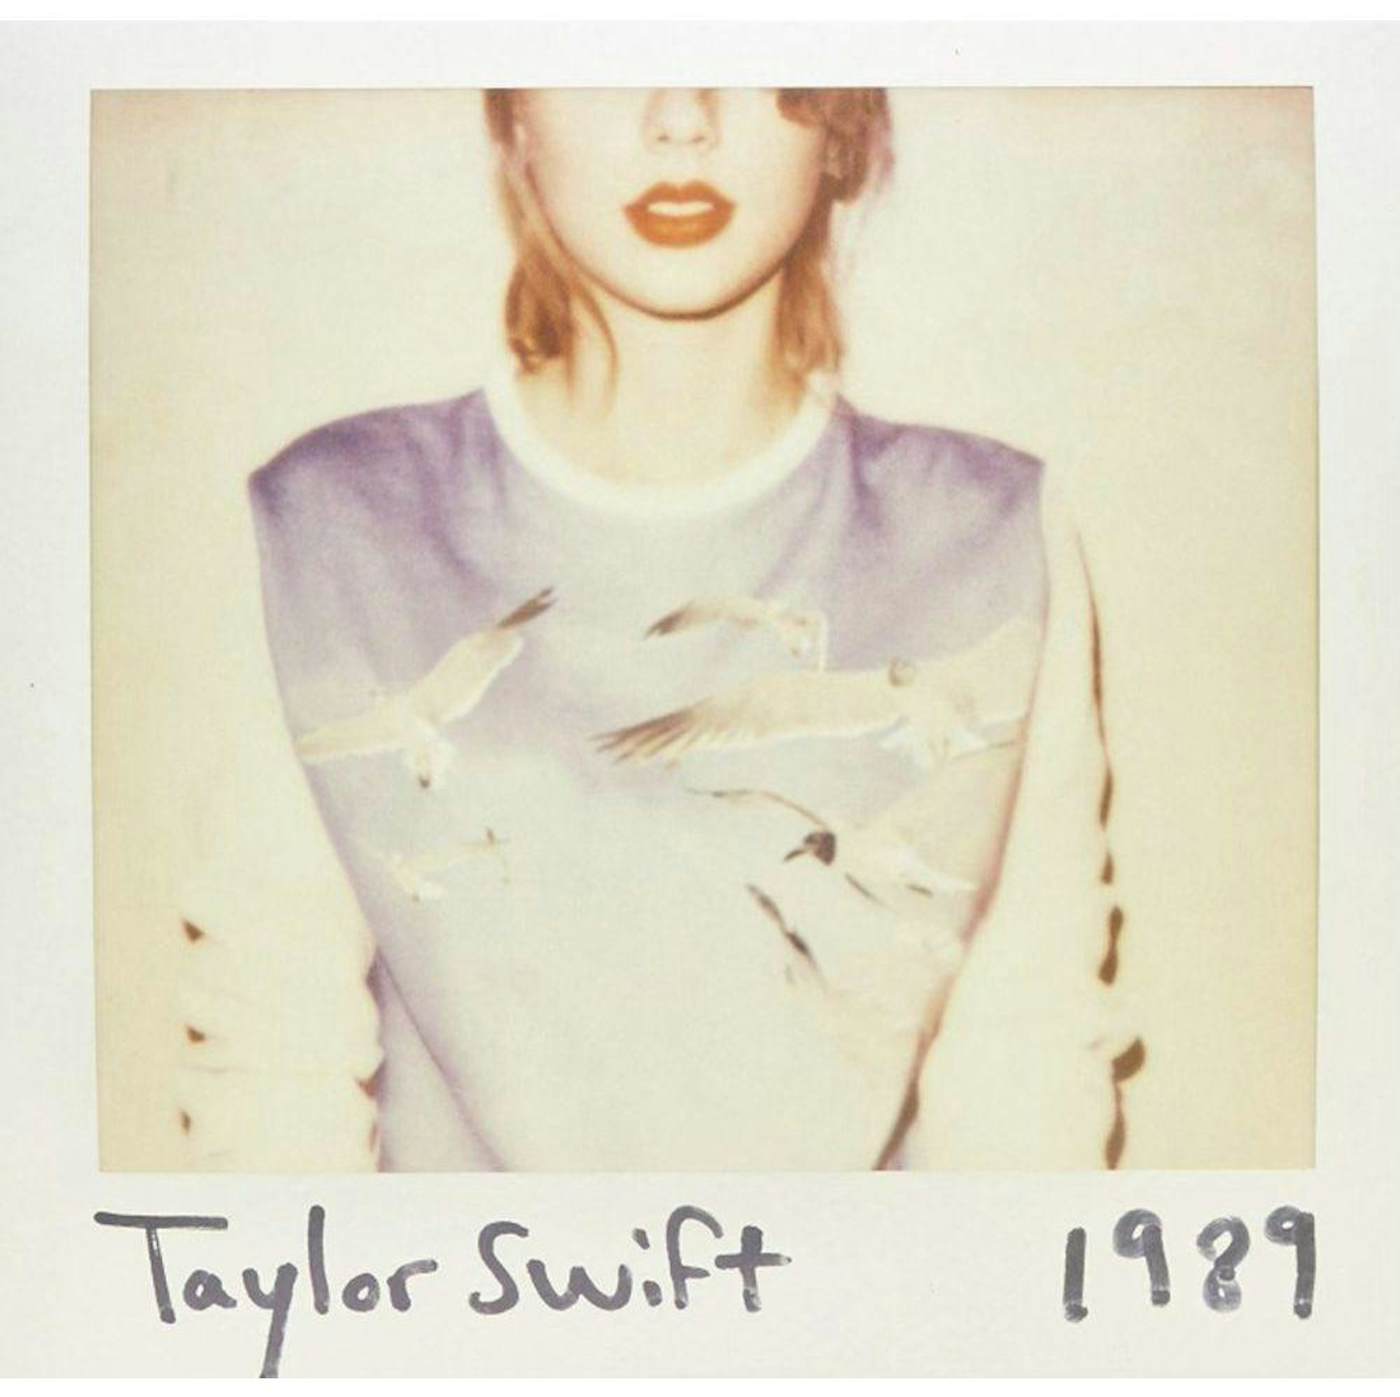 1989 (2LP) Vinyl Record - Taylor Swift